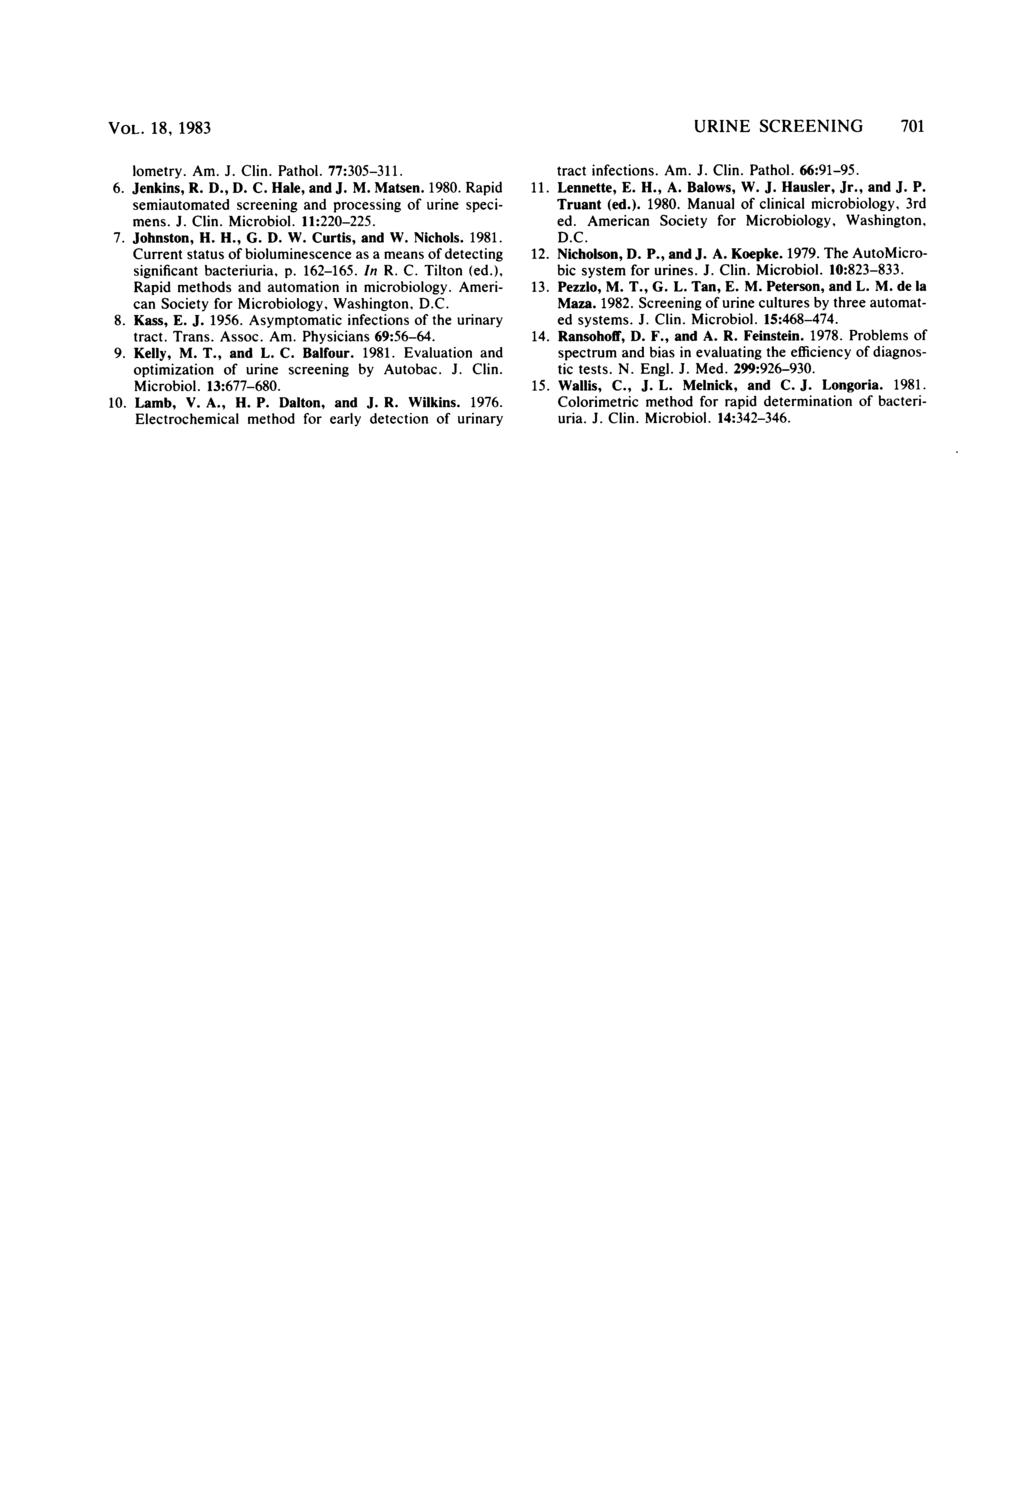 VOL. 18, 1983 lometry. Am. J. Clin. Pathol. 77:305-311. 6. Jenkins, R. D., D. C. Hale, and J. M. Matsen. 1980. Rapid semiautomated screening and processing of urine specimens. J. Clin. Microbiol.